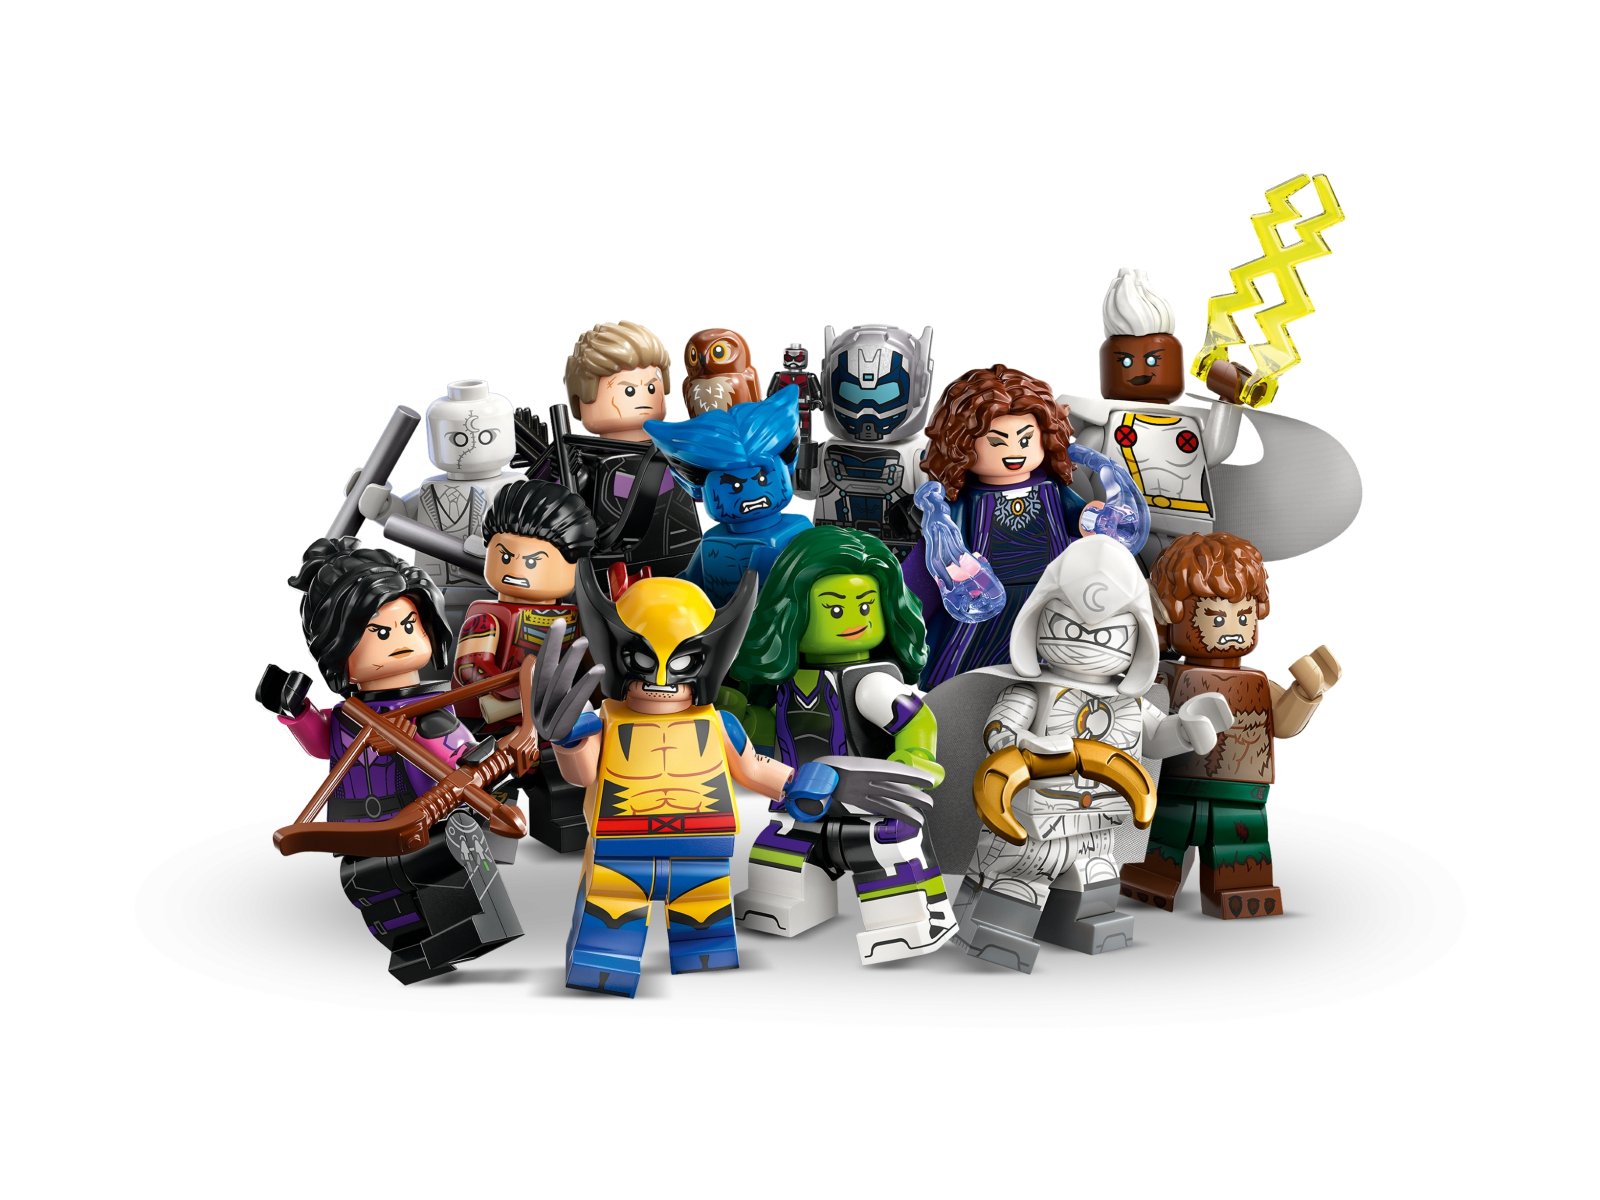 LEGO 71039 Minifigures Marvel Seria 2